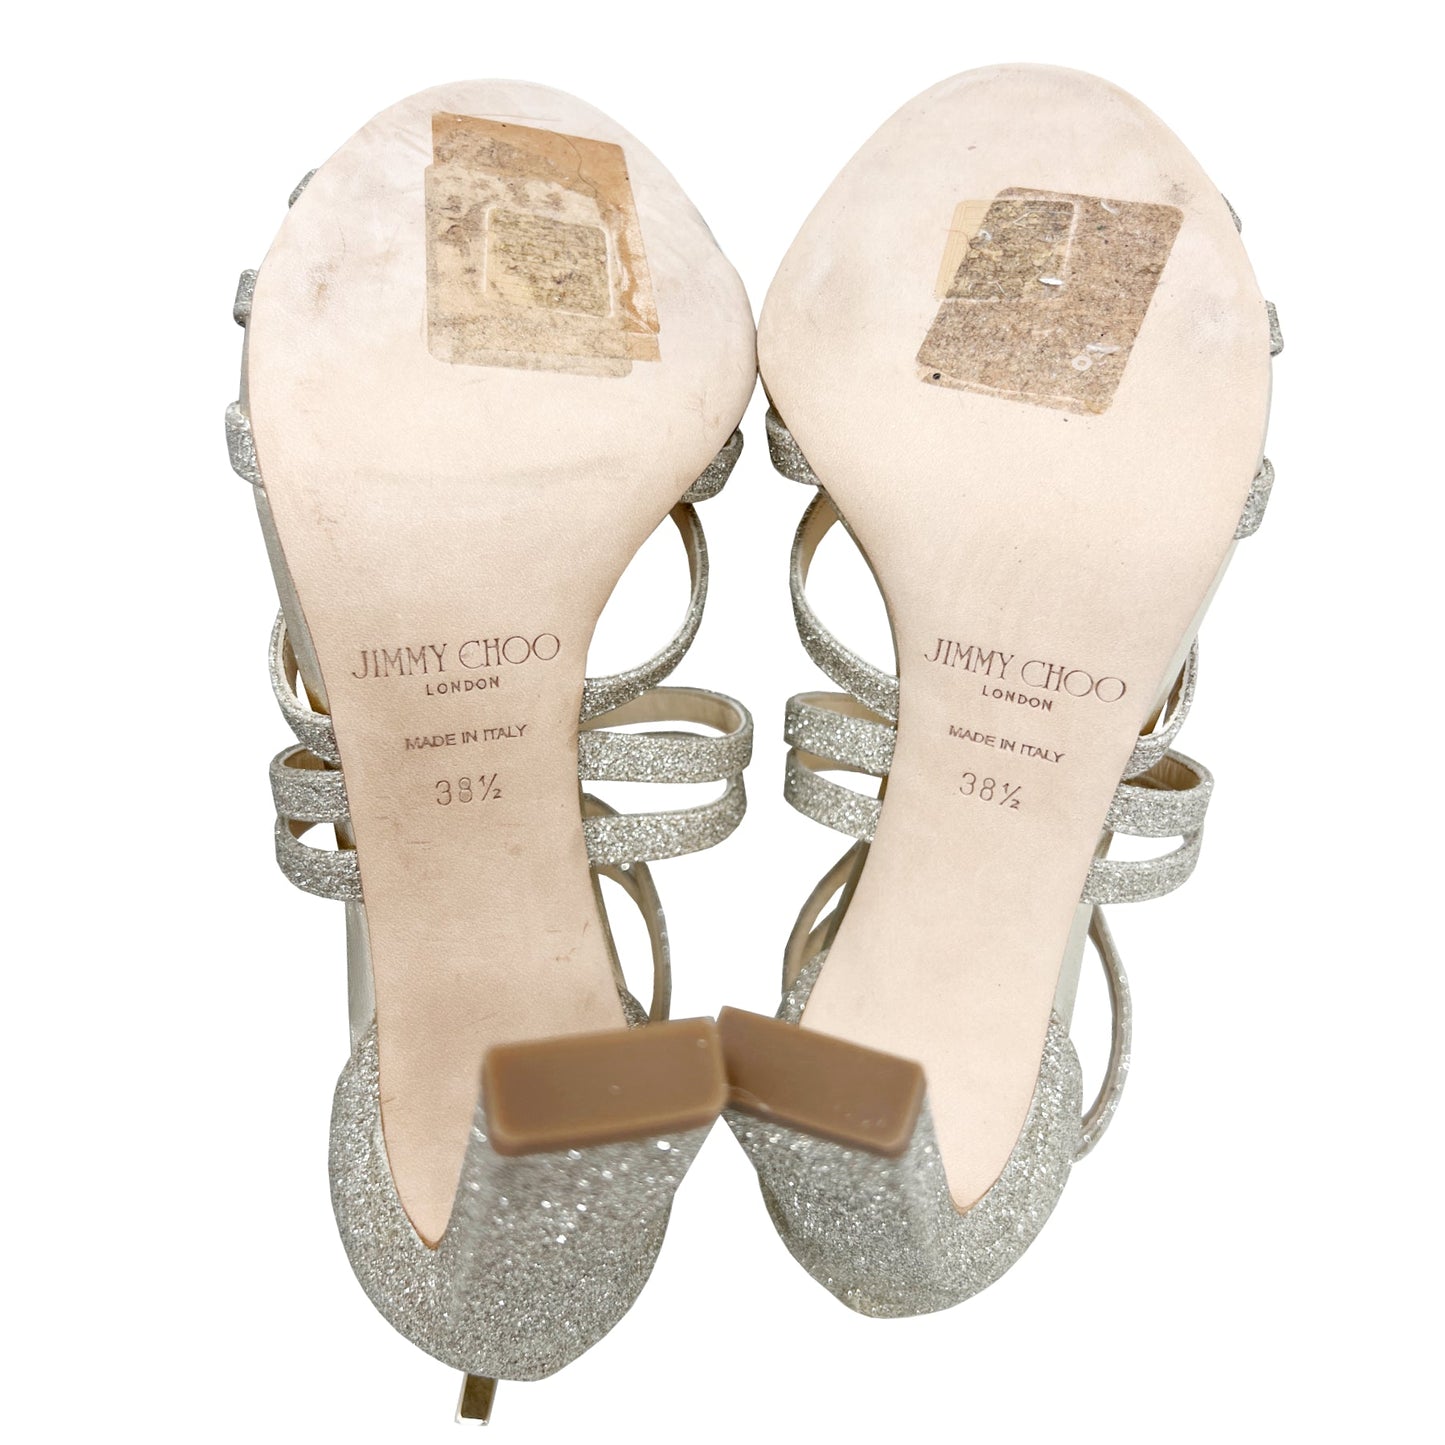 Jimmy Choo Selina Gold Metallic Glitter Caged Sandals Size EU 38.5